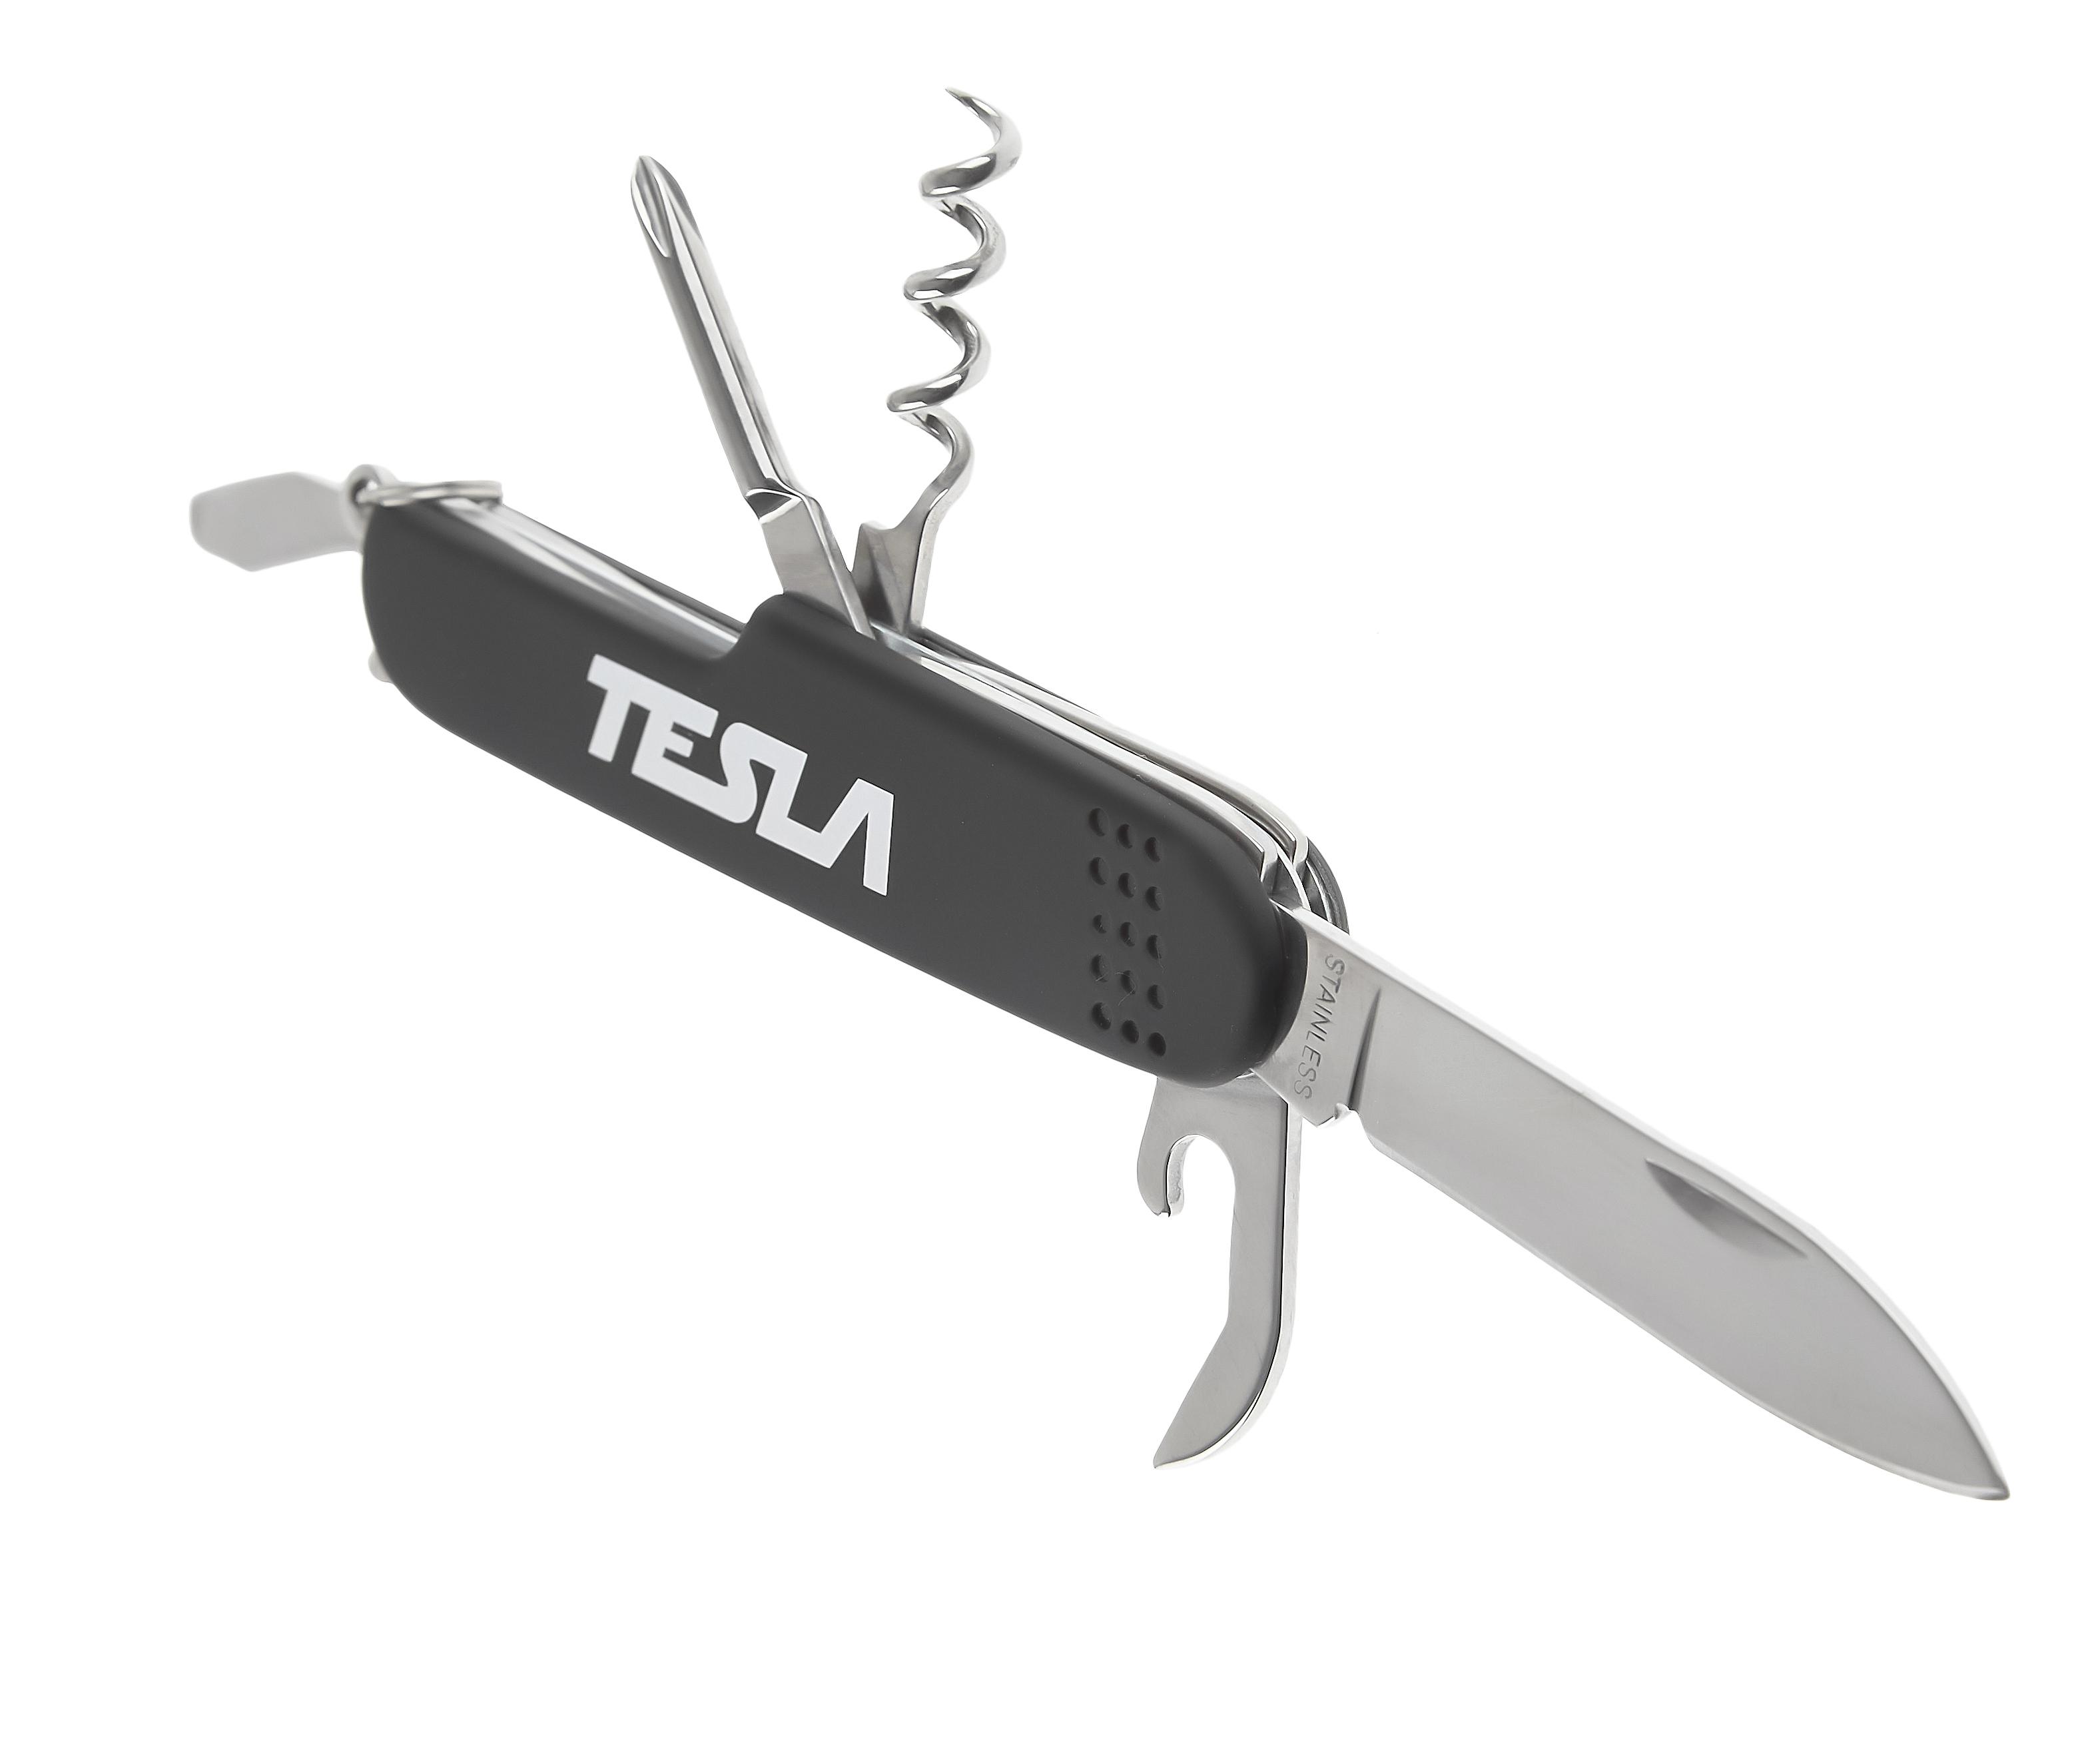 Нож Tesla Km-02